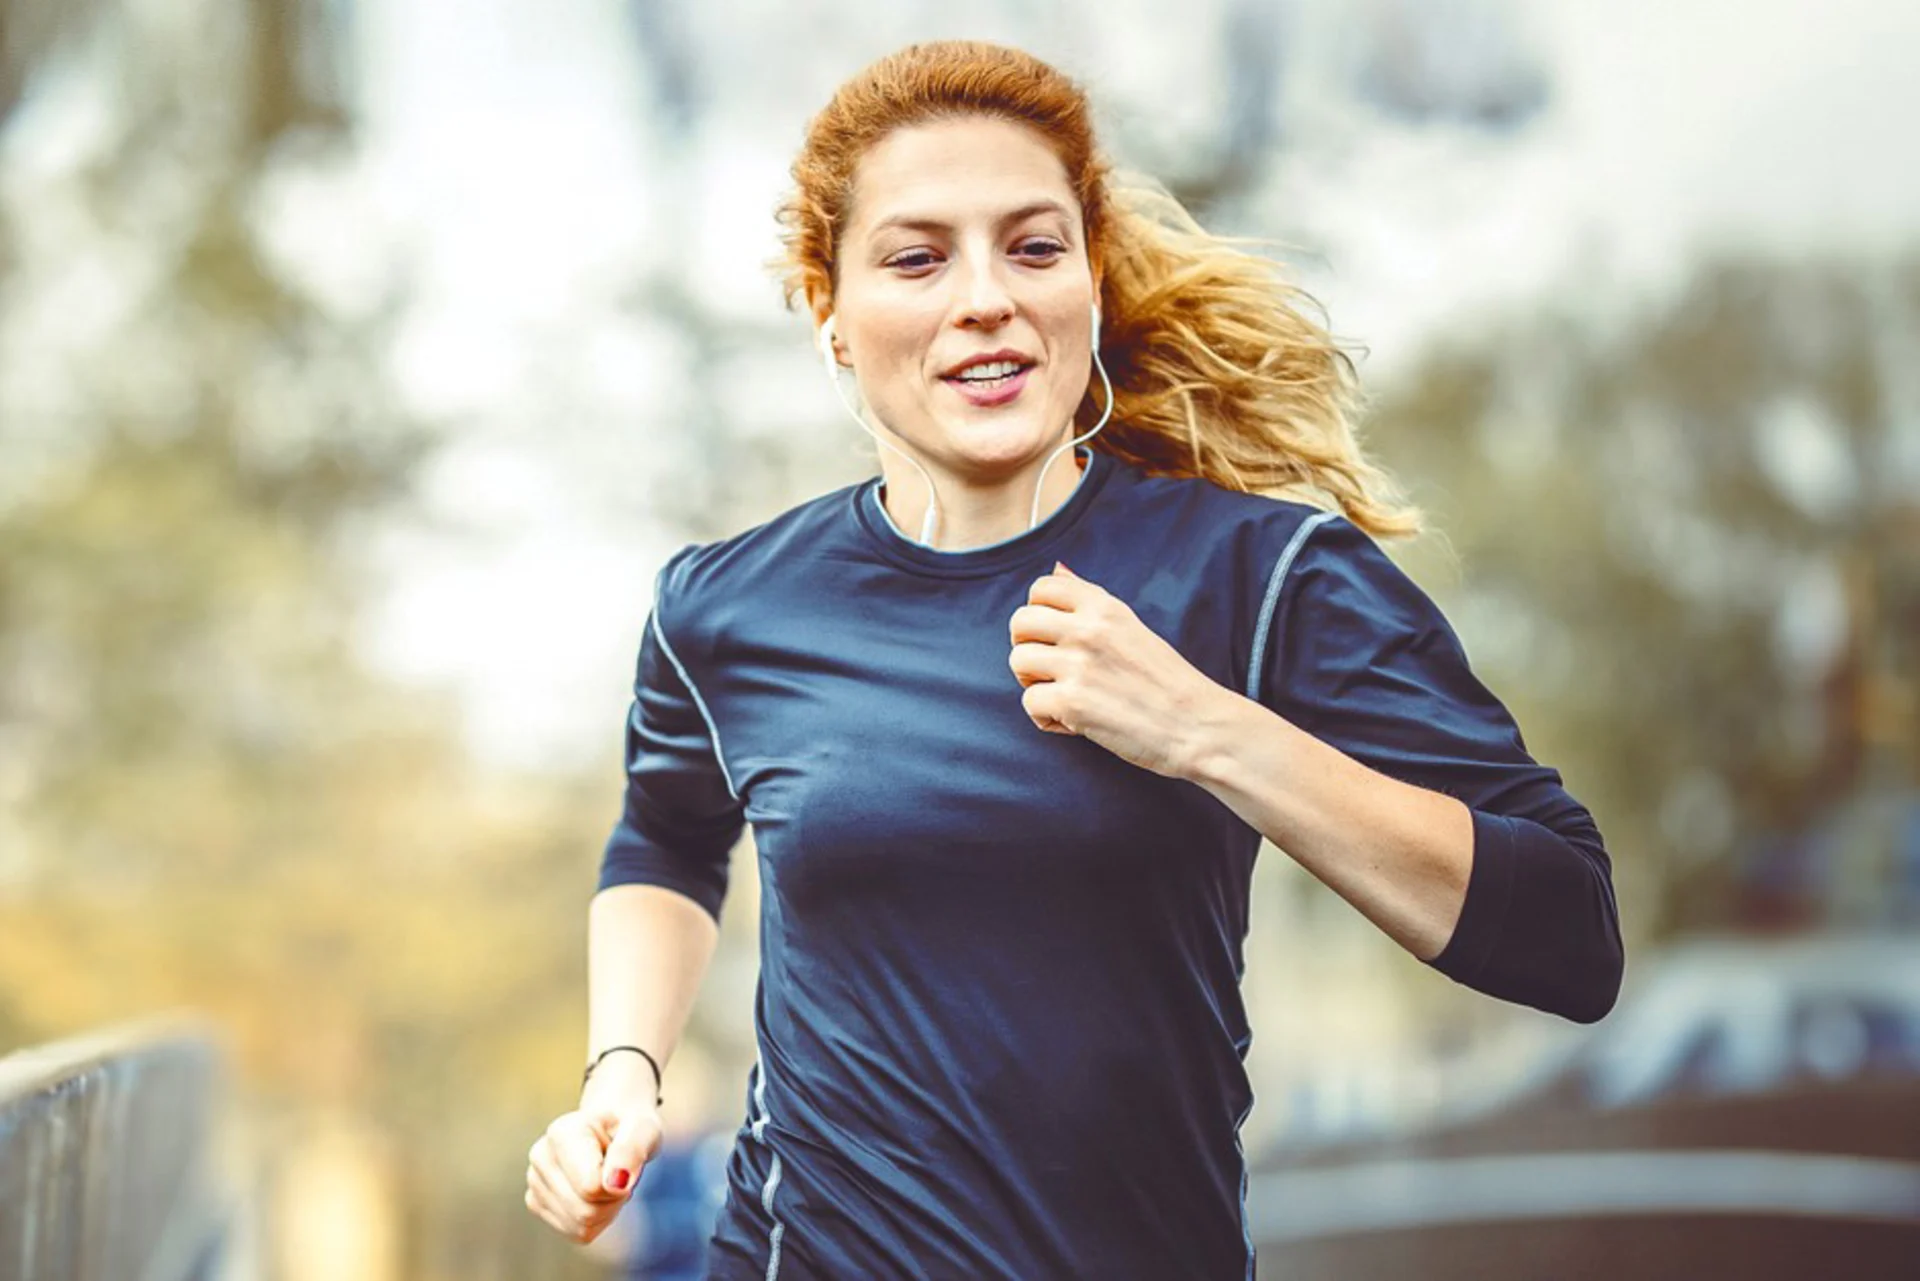 Woman with headphones jogging